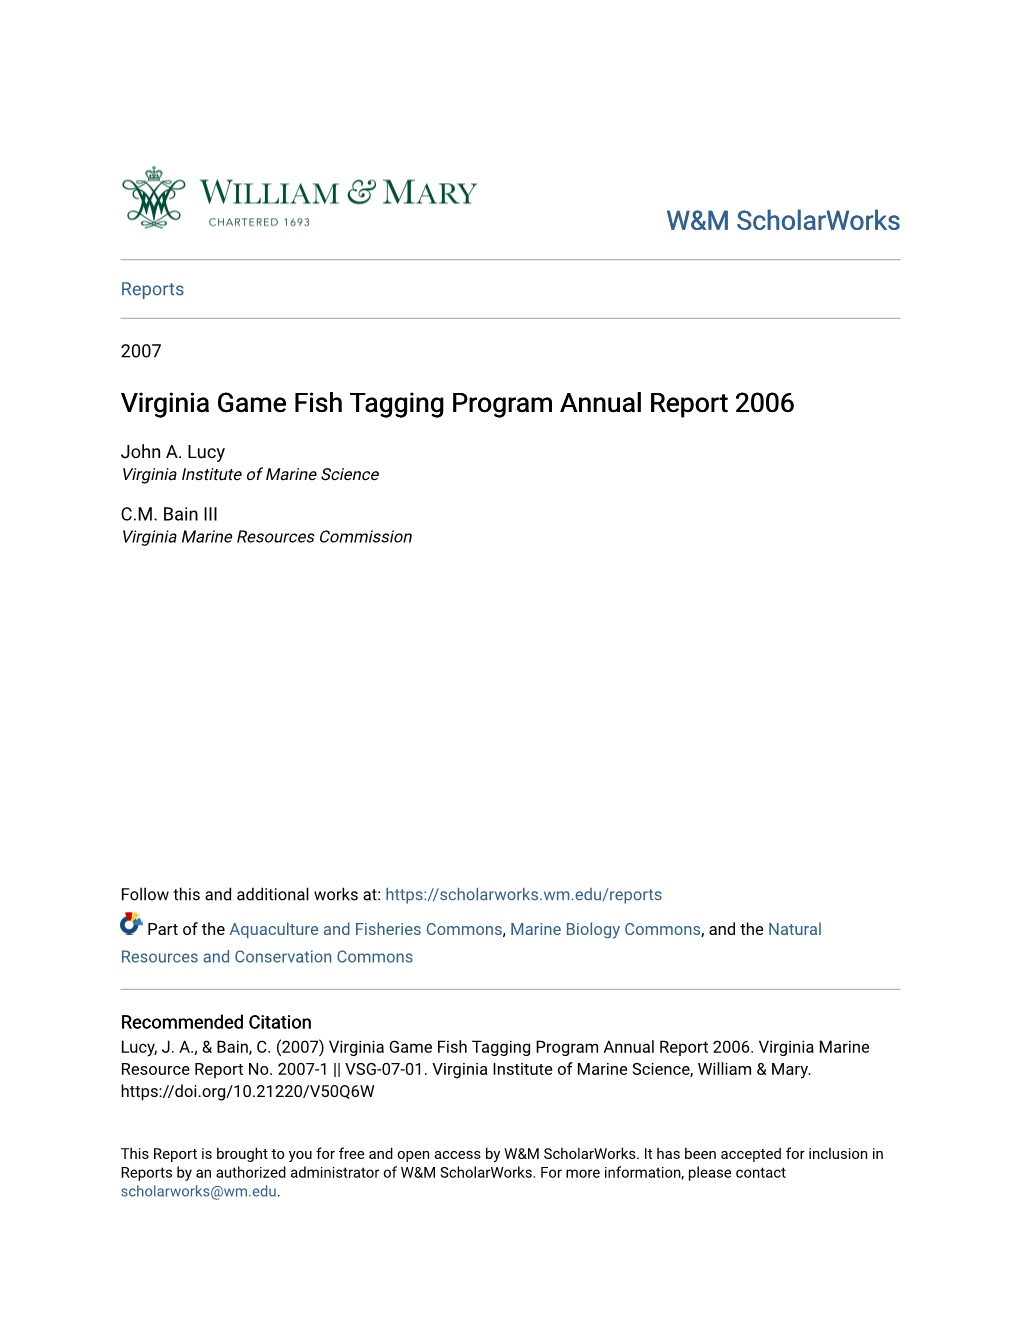 Virginia Game Fish Tagging Program Annual Report 2006